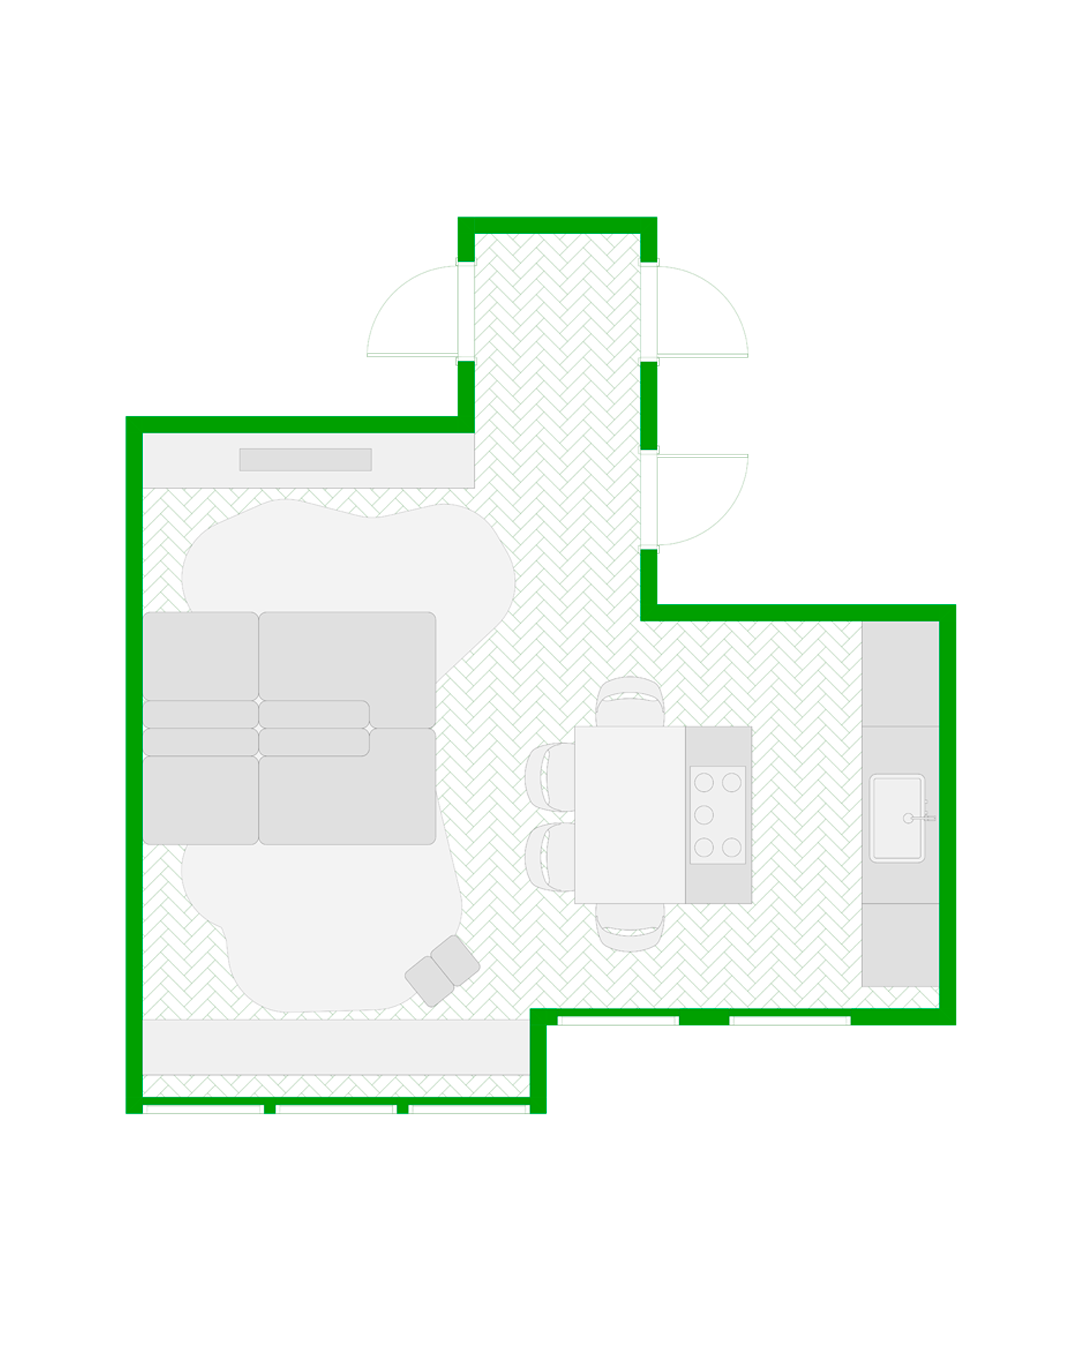 home decor reforma interiores arquitectura ARQUITETURA 3dsmax corona archiviz projeto cozinha